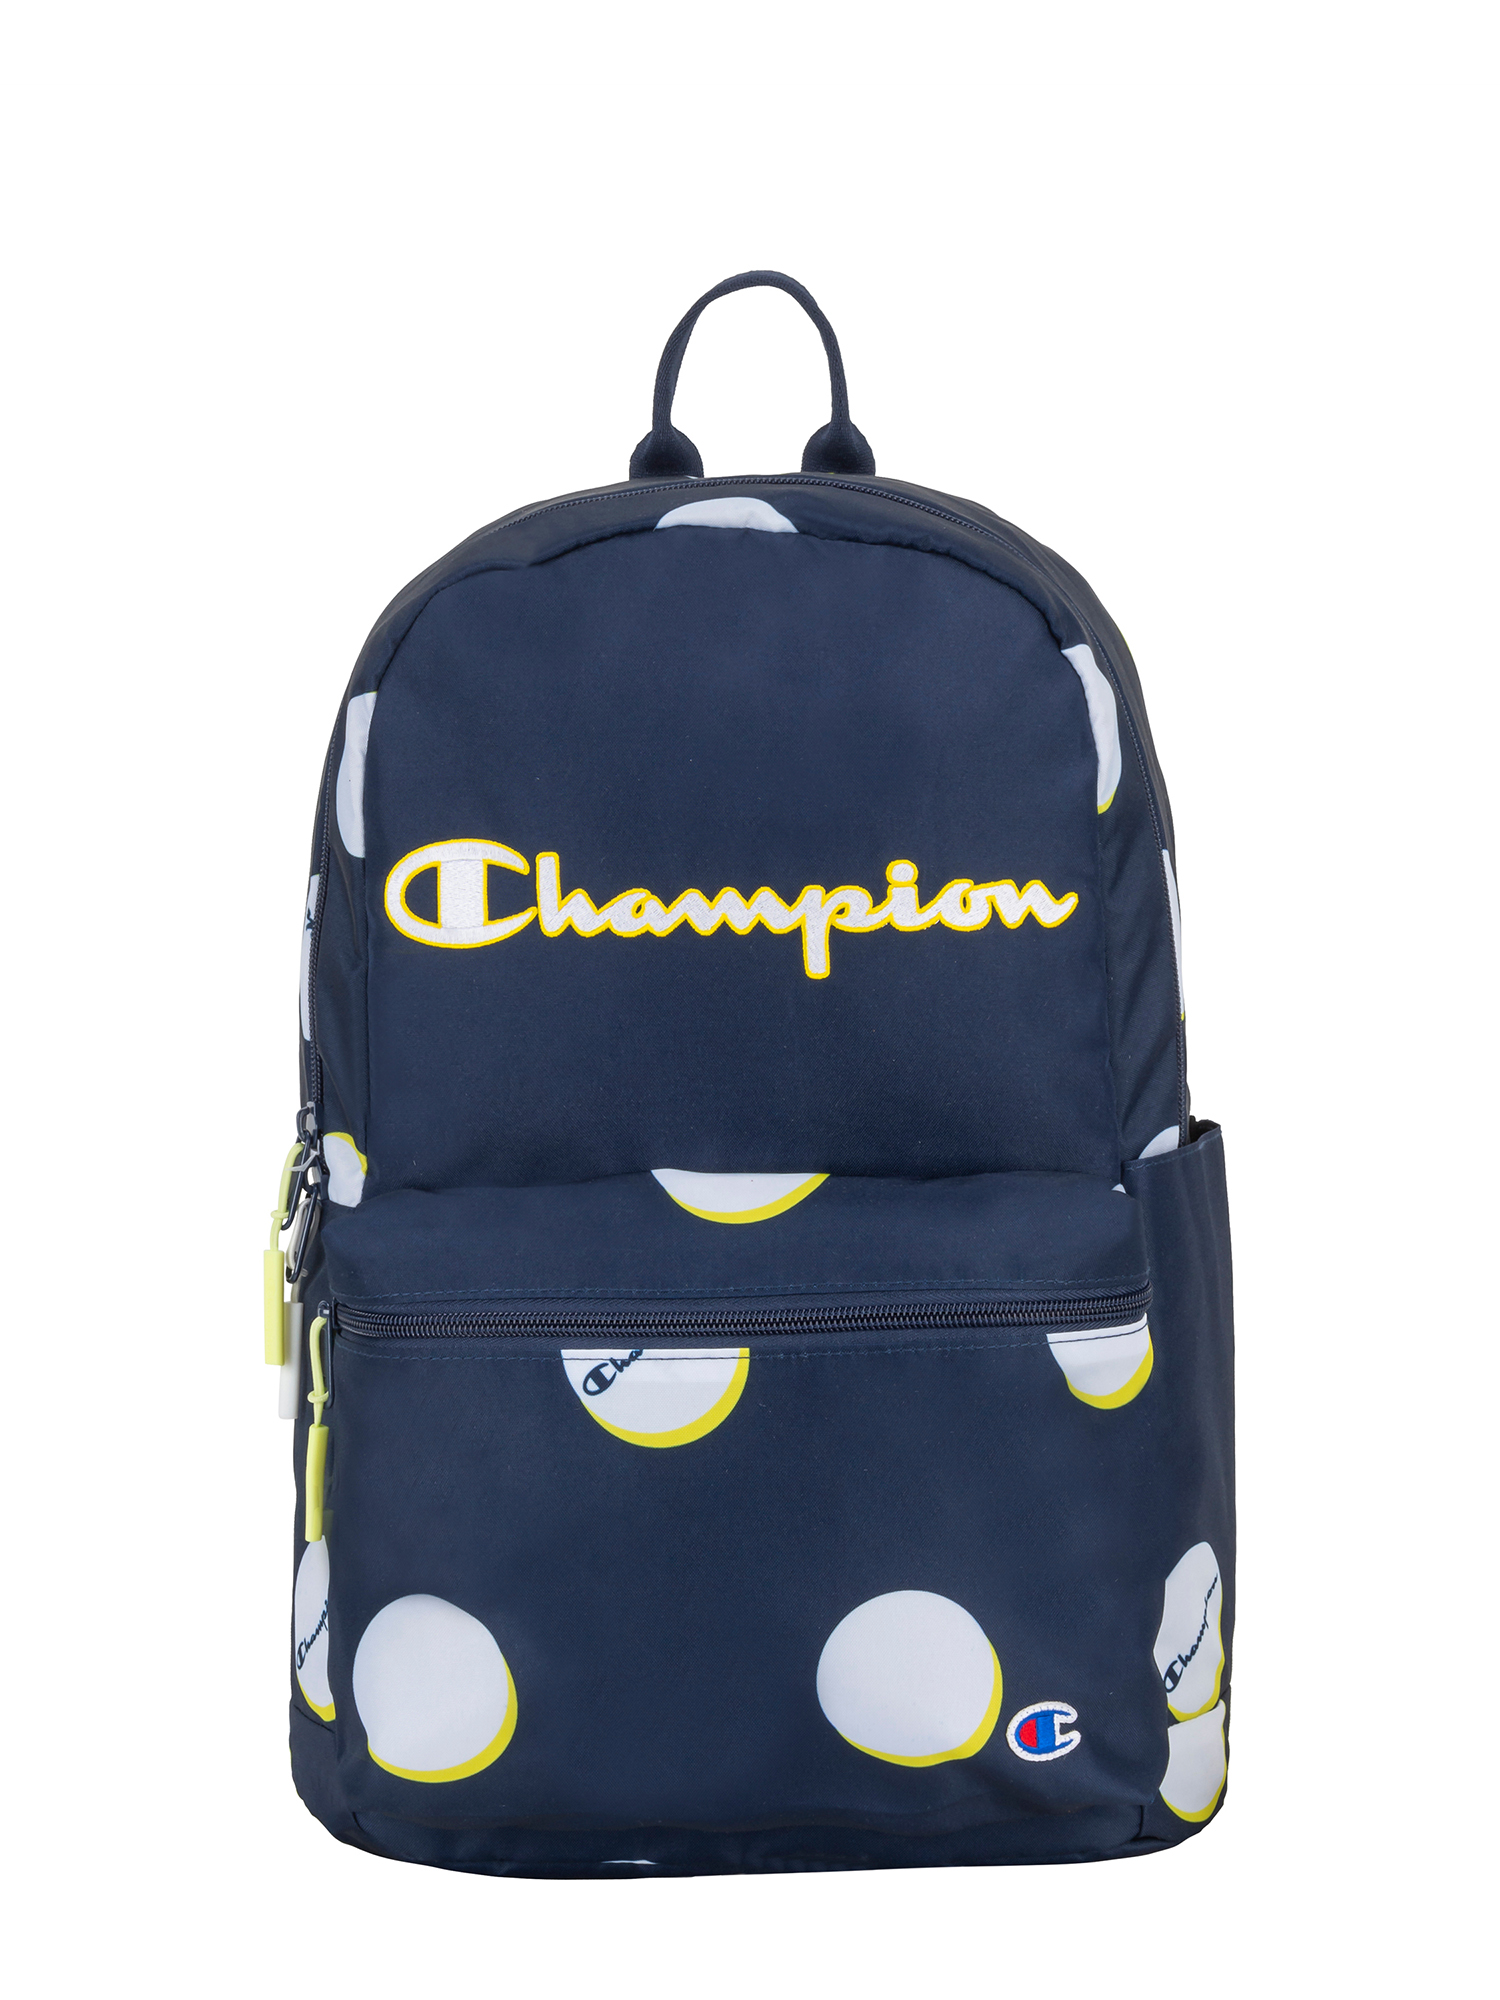 Champion Billboard Backpack, Navy - image 1 of 5